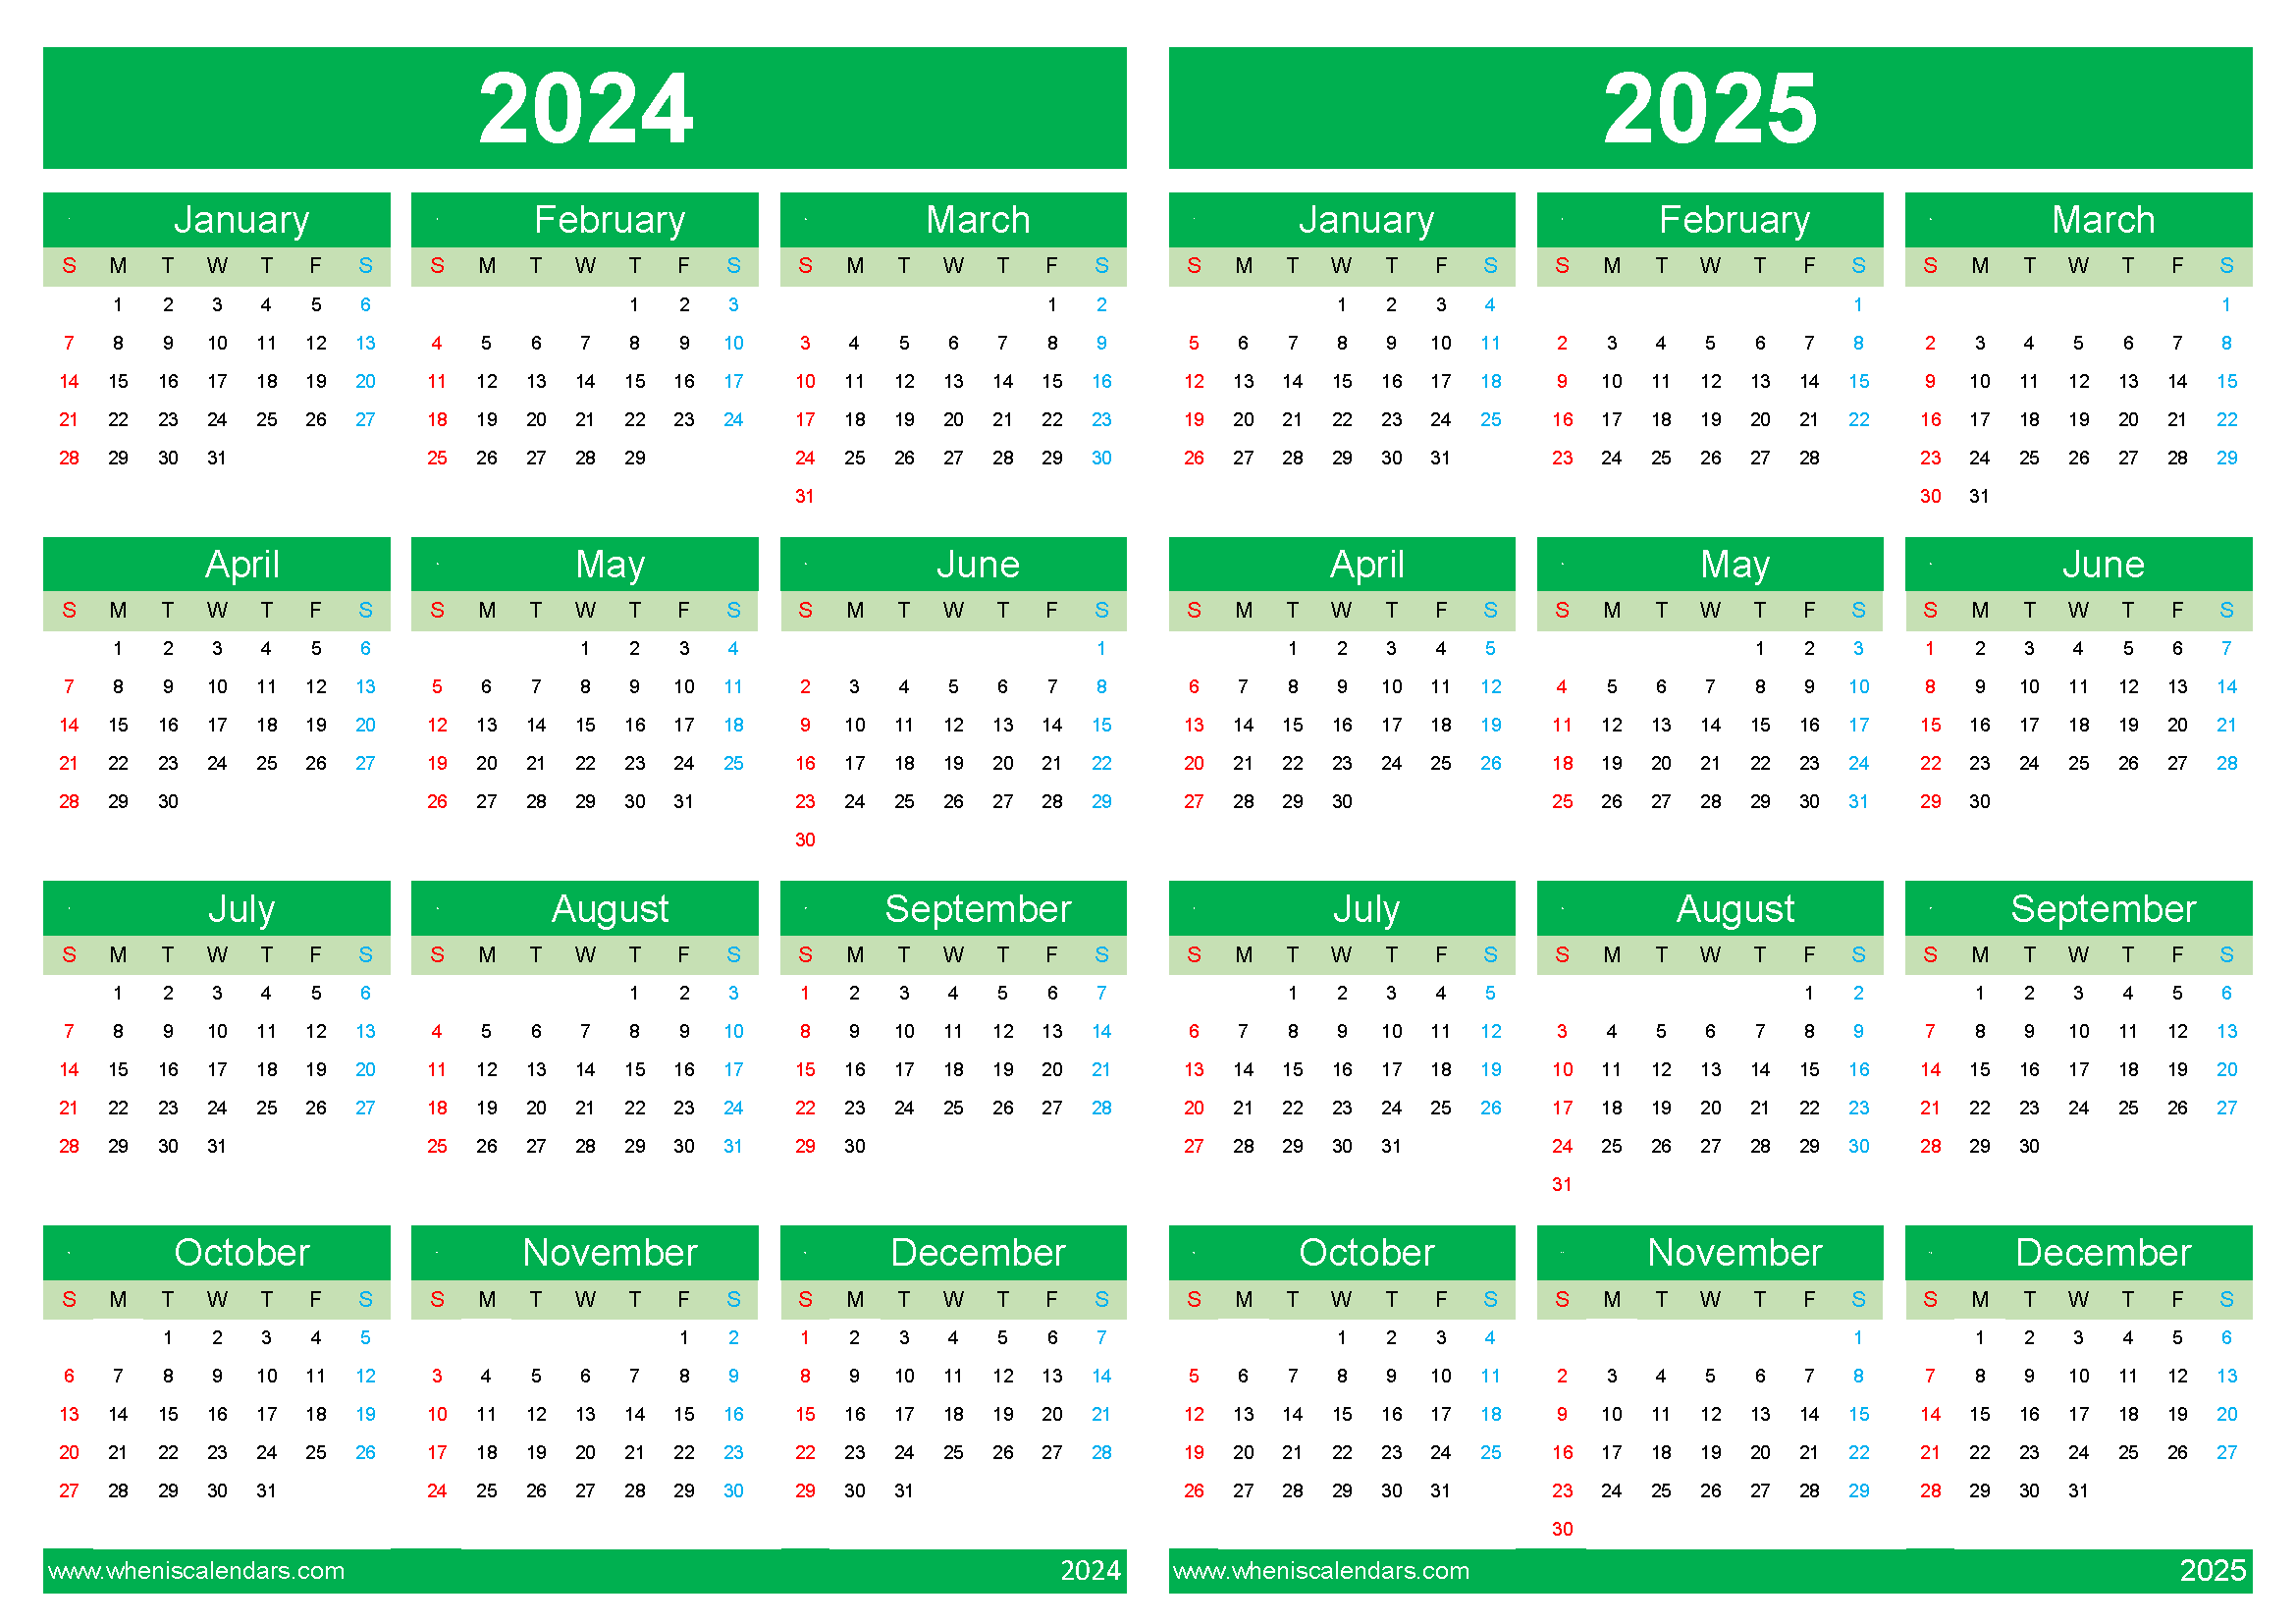 2024 and 2025 academic calendar 45Y13